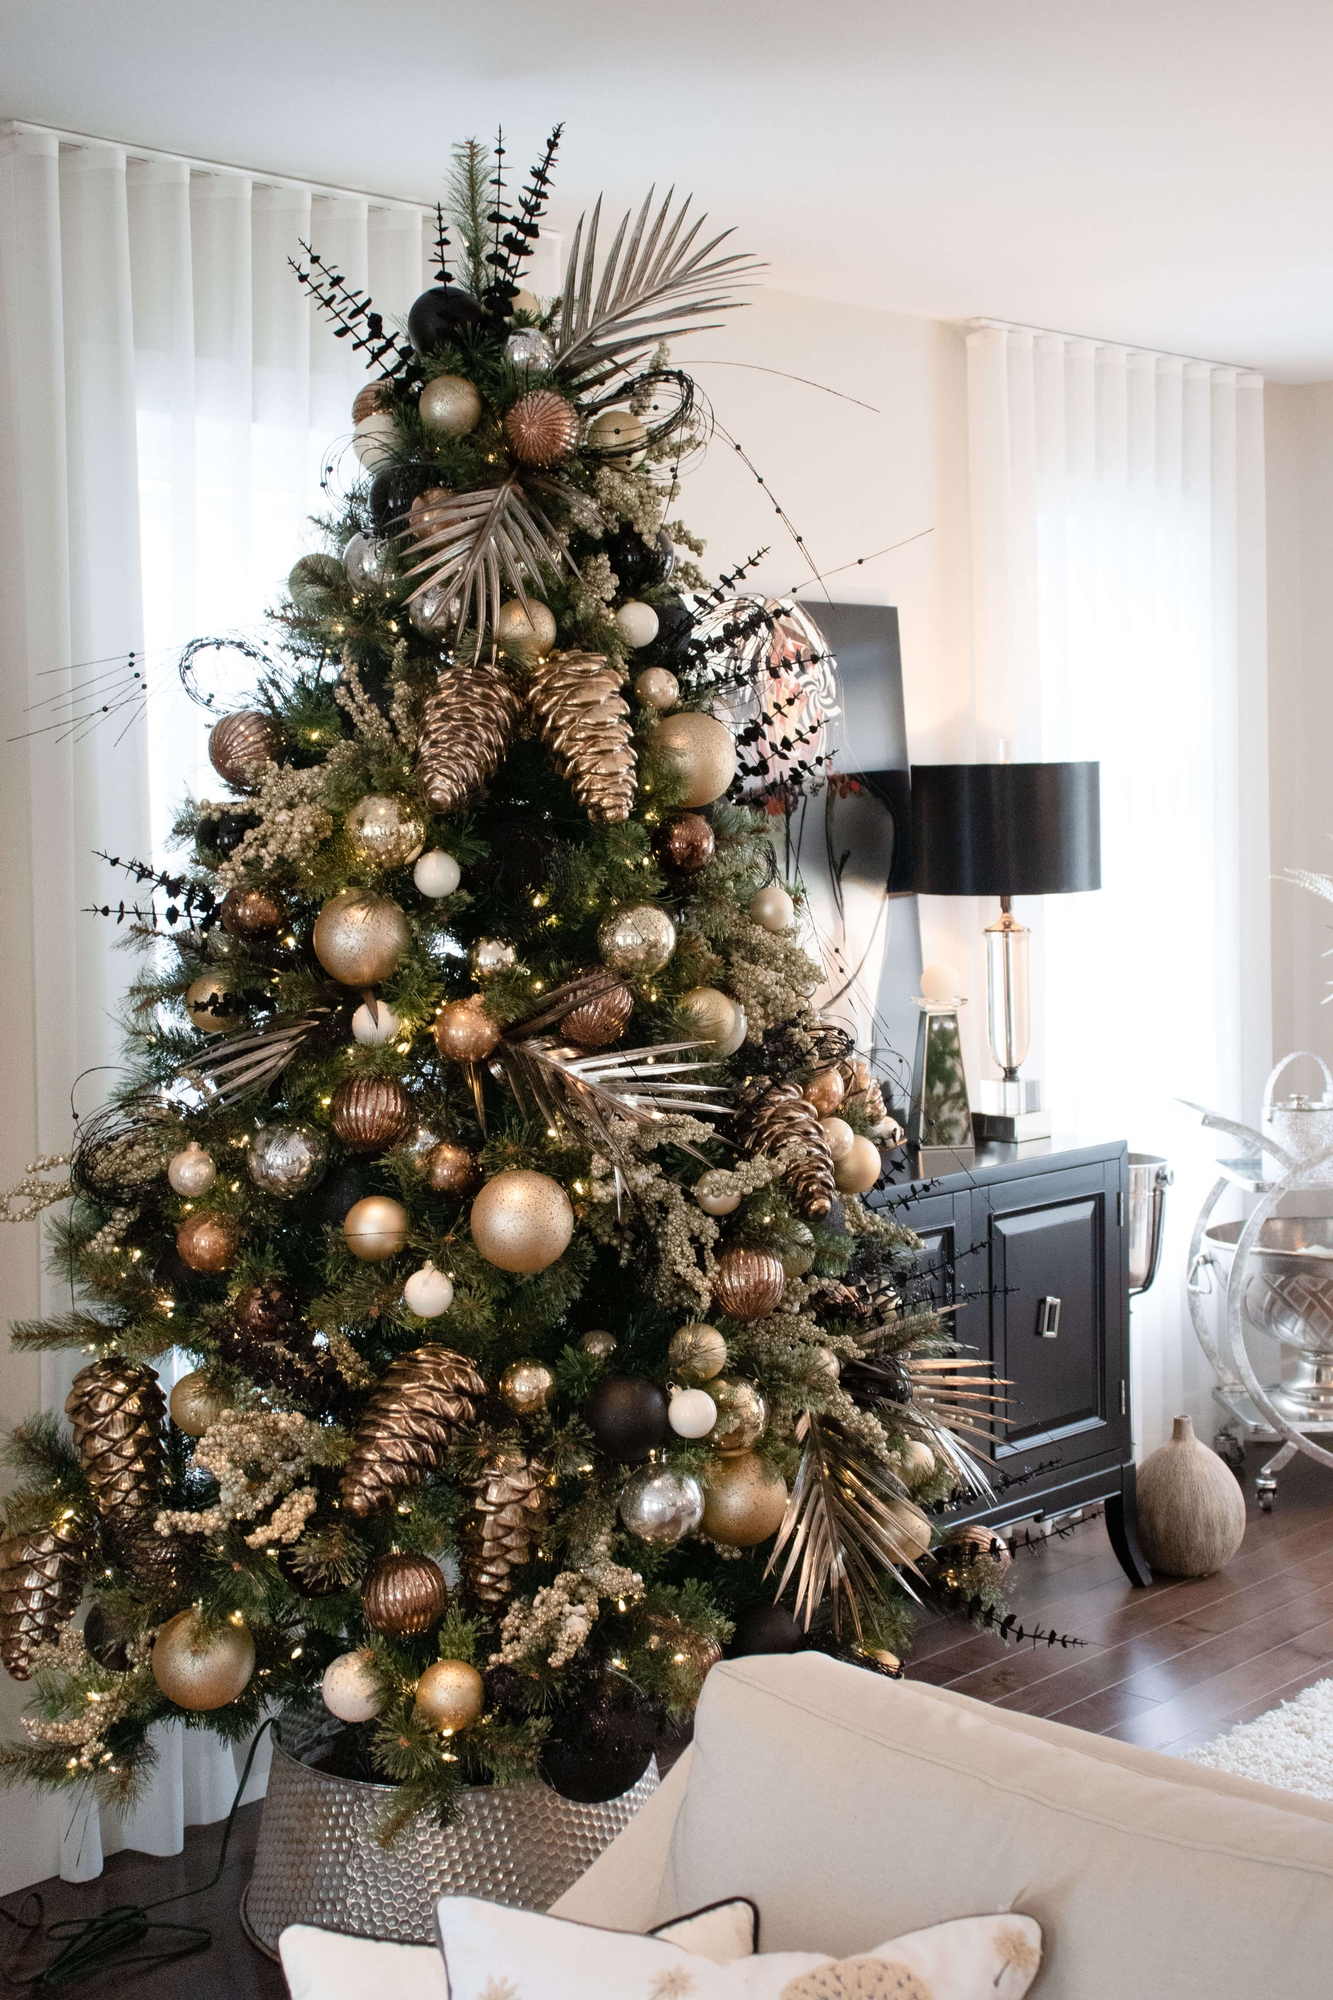 A Christmas Tree with Metallic Greenery